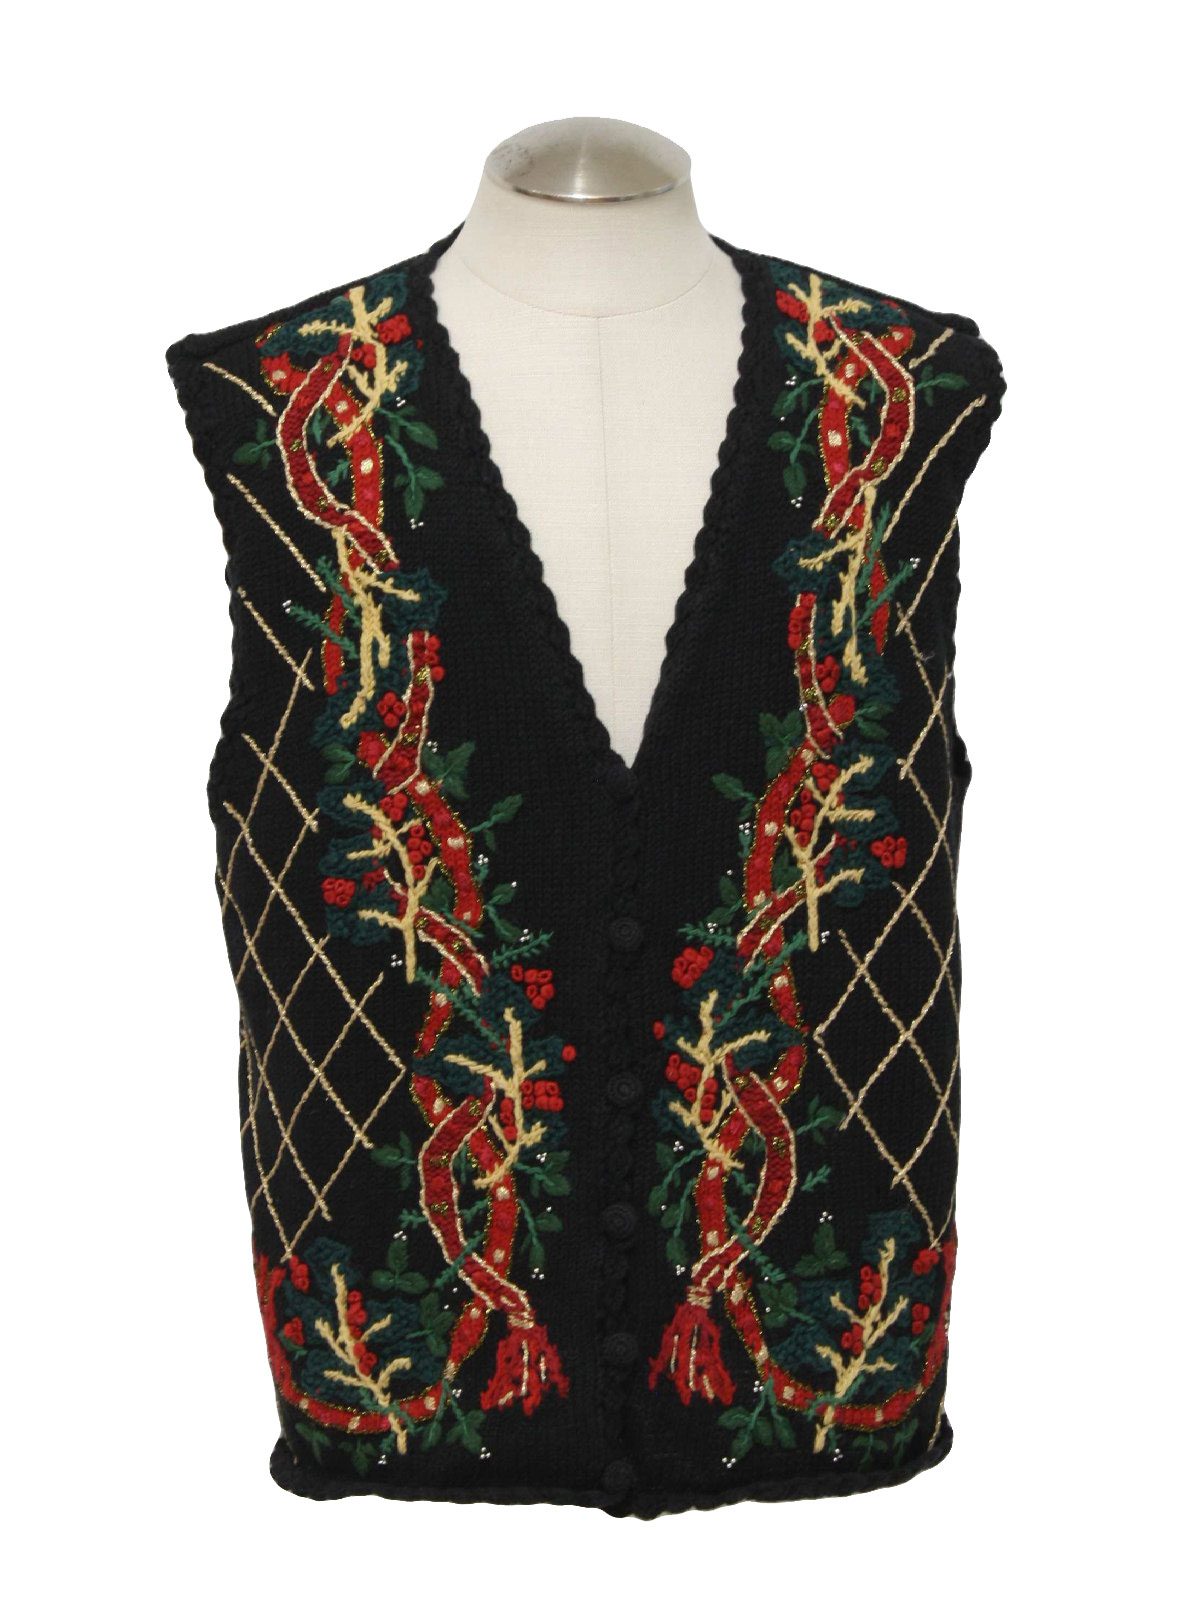 Ugly Christmas Sweater Vest: -Tiara- Unisex Black background cotton ...